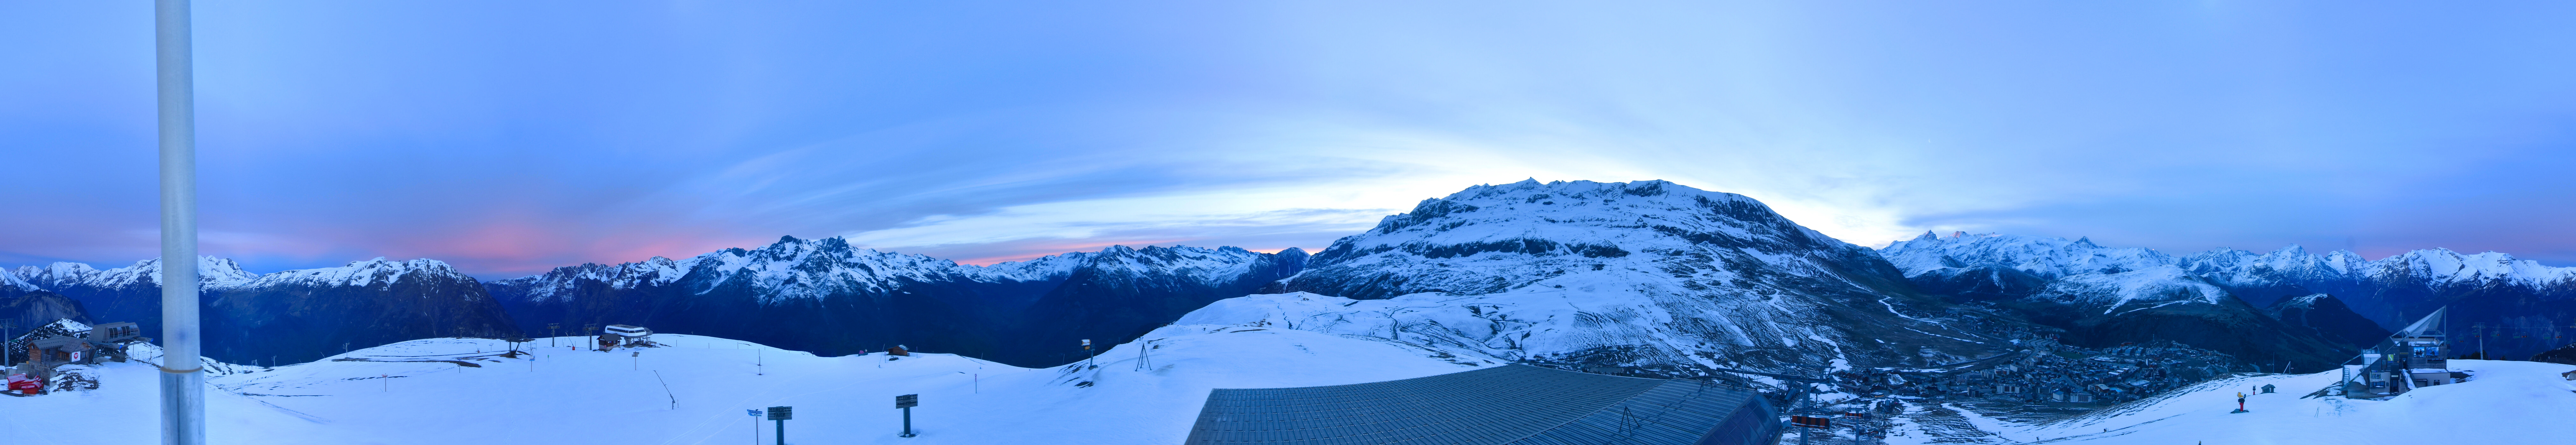 Alpe d'Huez webcam - Le Signal ski station